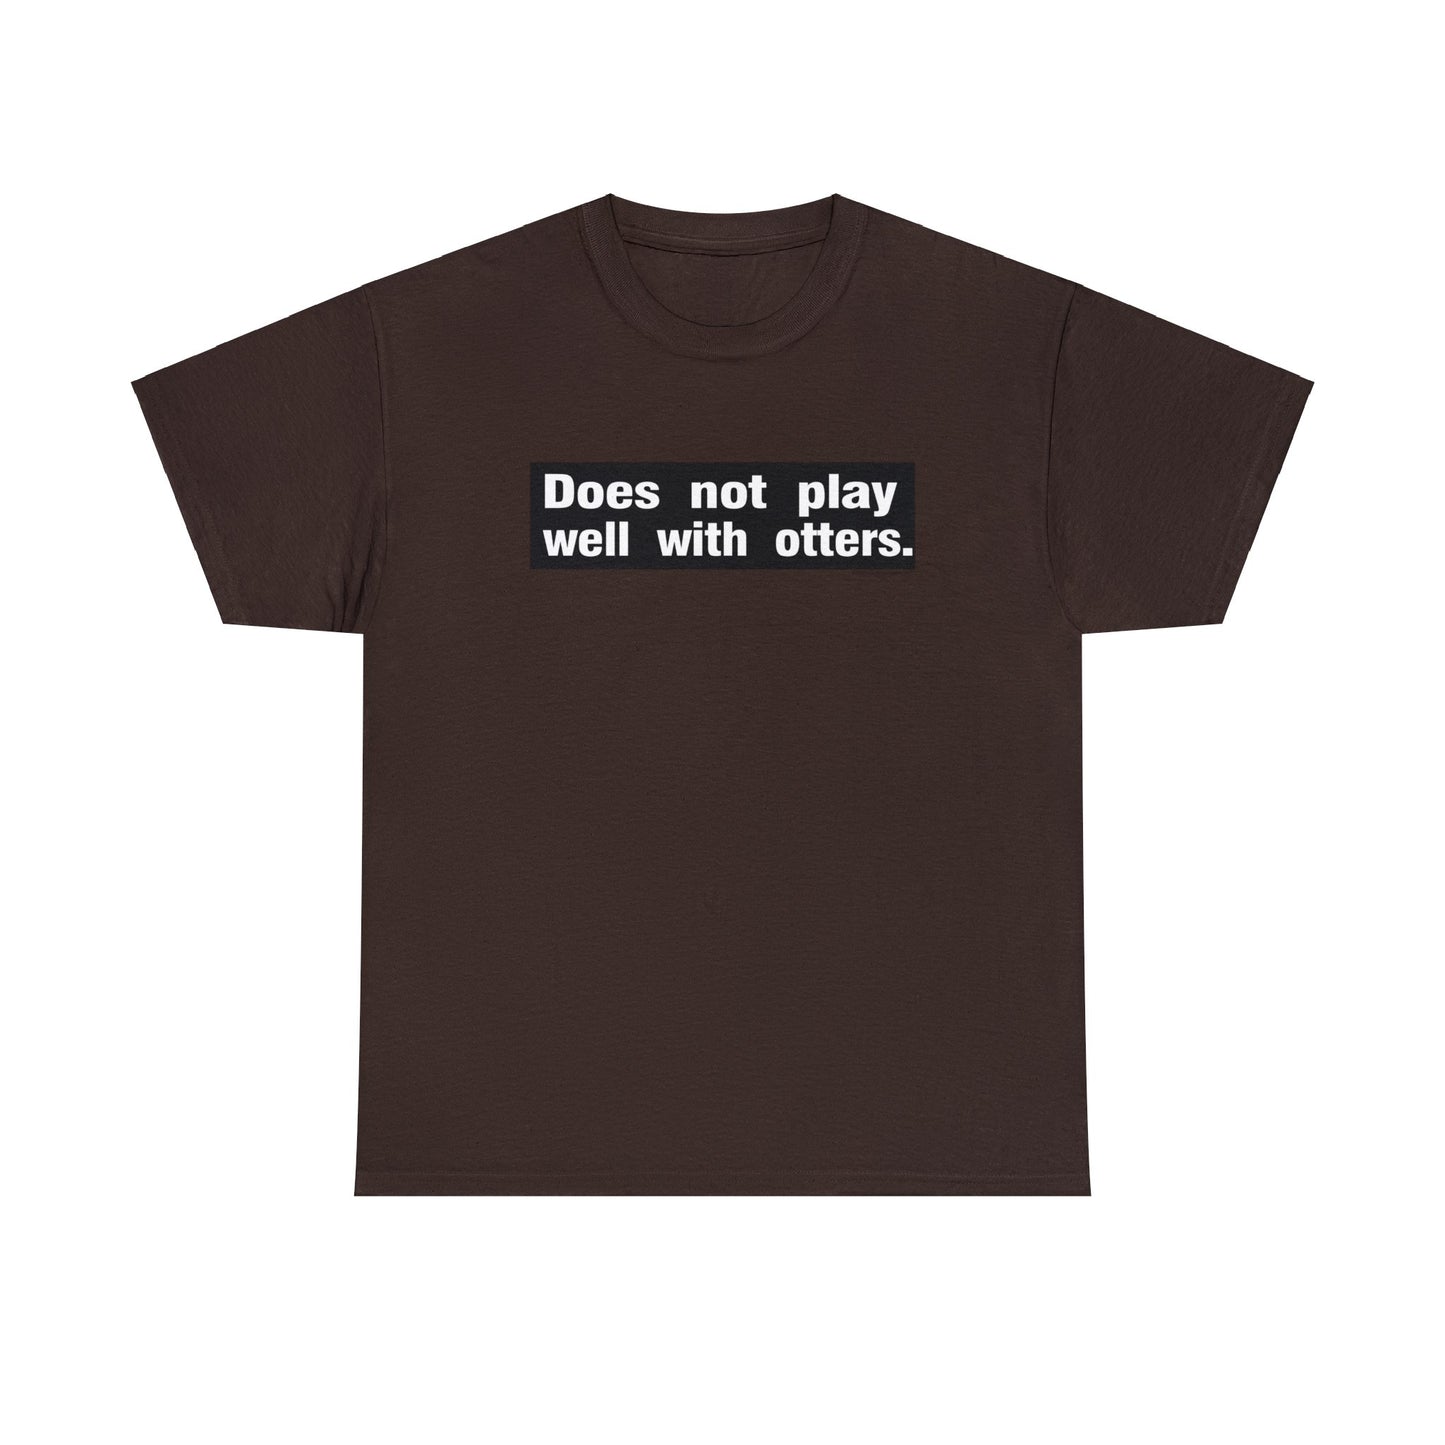 Does Not Play With Otters, funny t-shirt, Pun T-Shirt, Joke Tee, Otter Tee, Ironic Tee, humorous t-shirt, satirical t-shirt, t-shirt gift